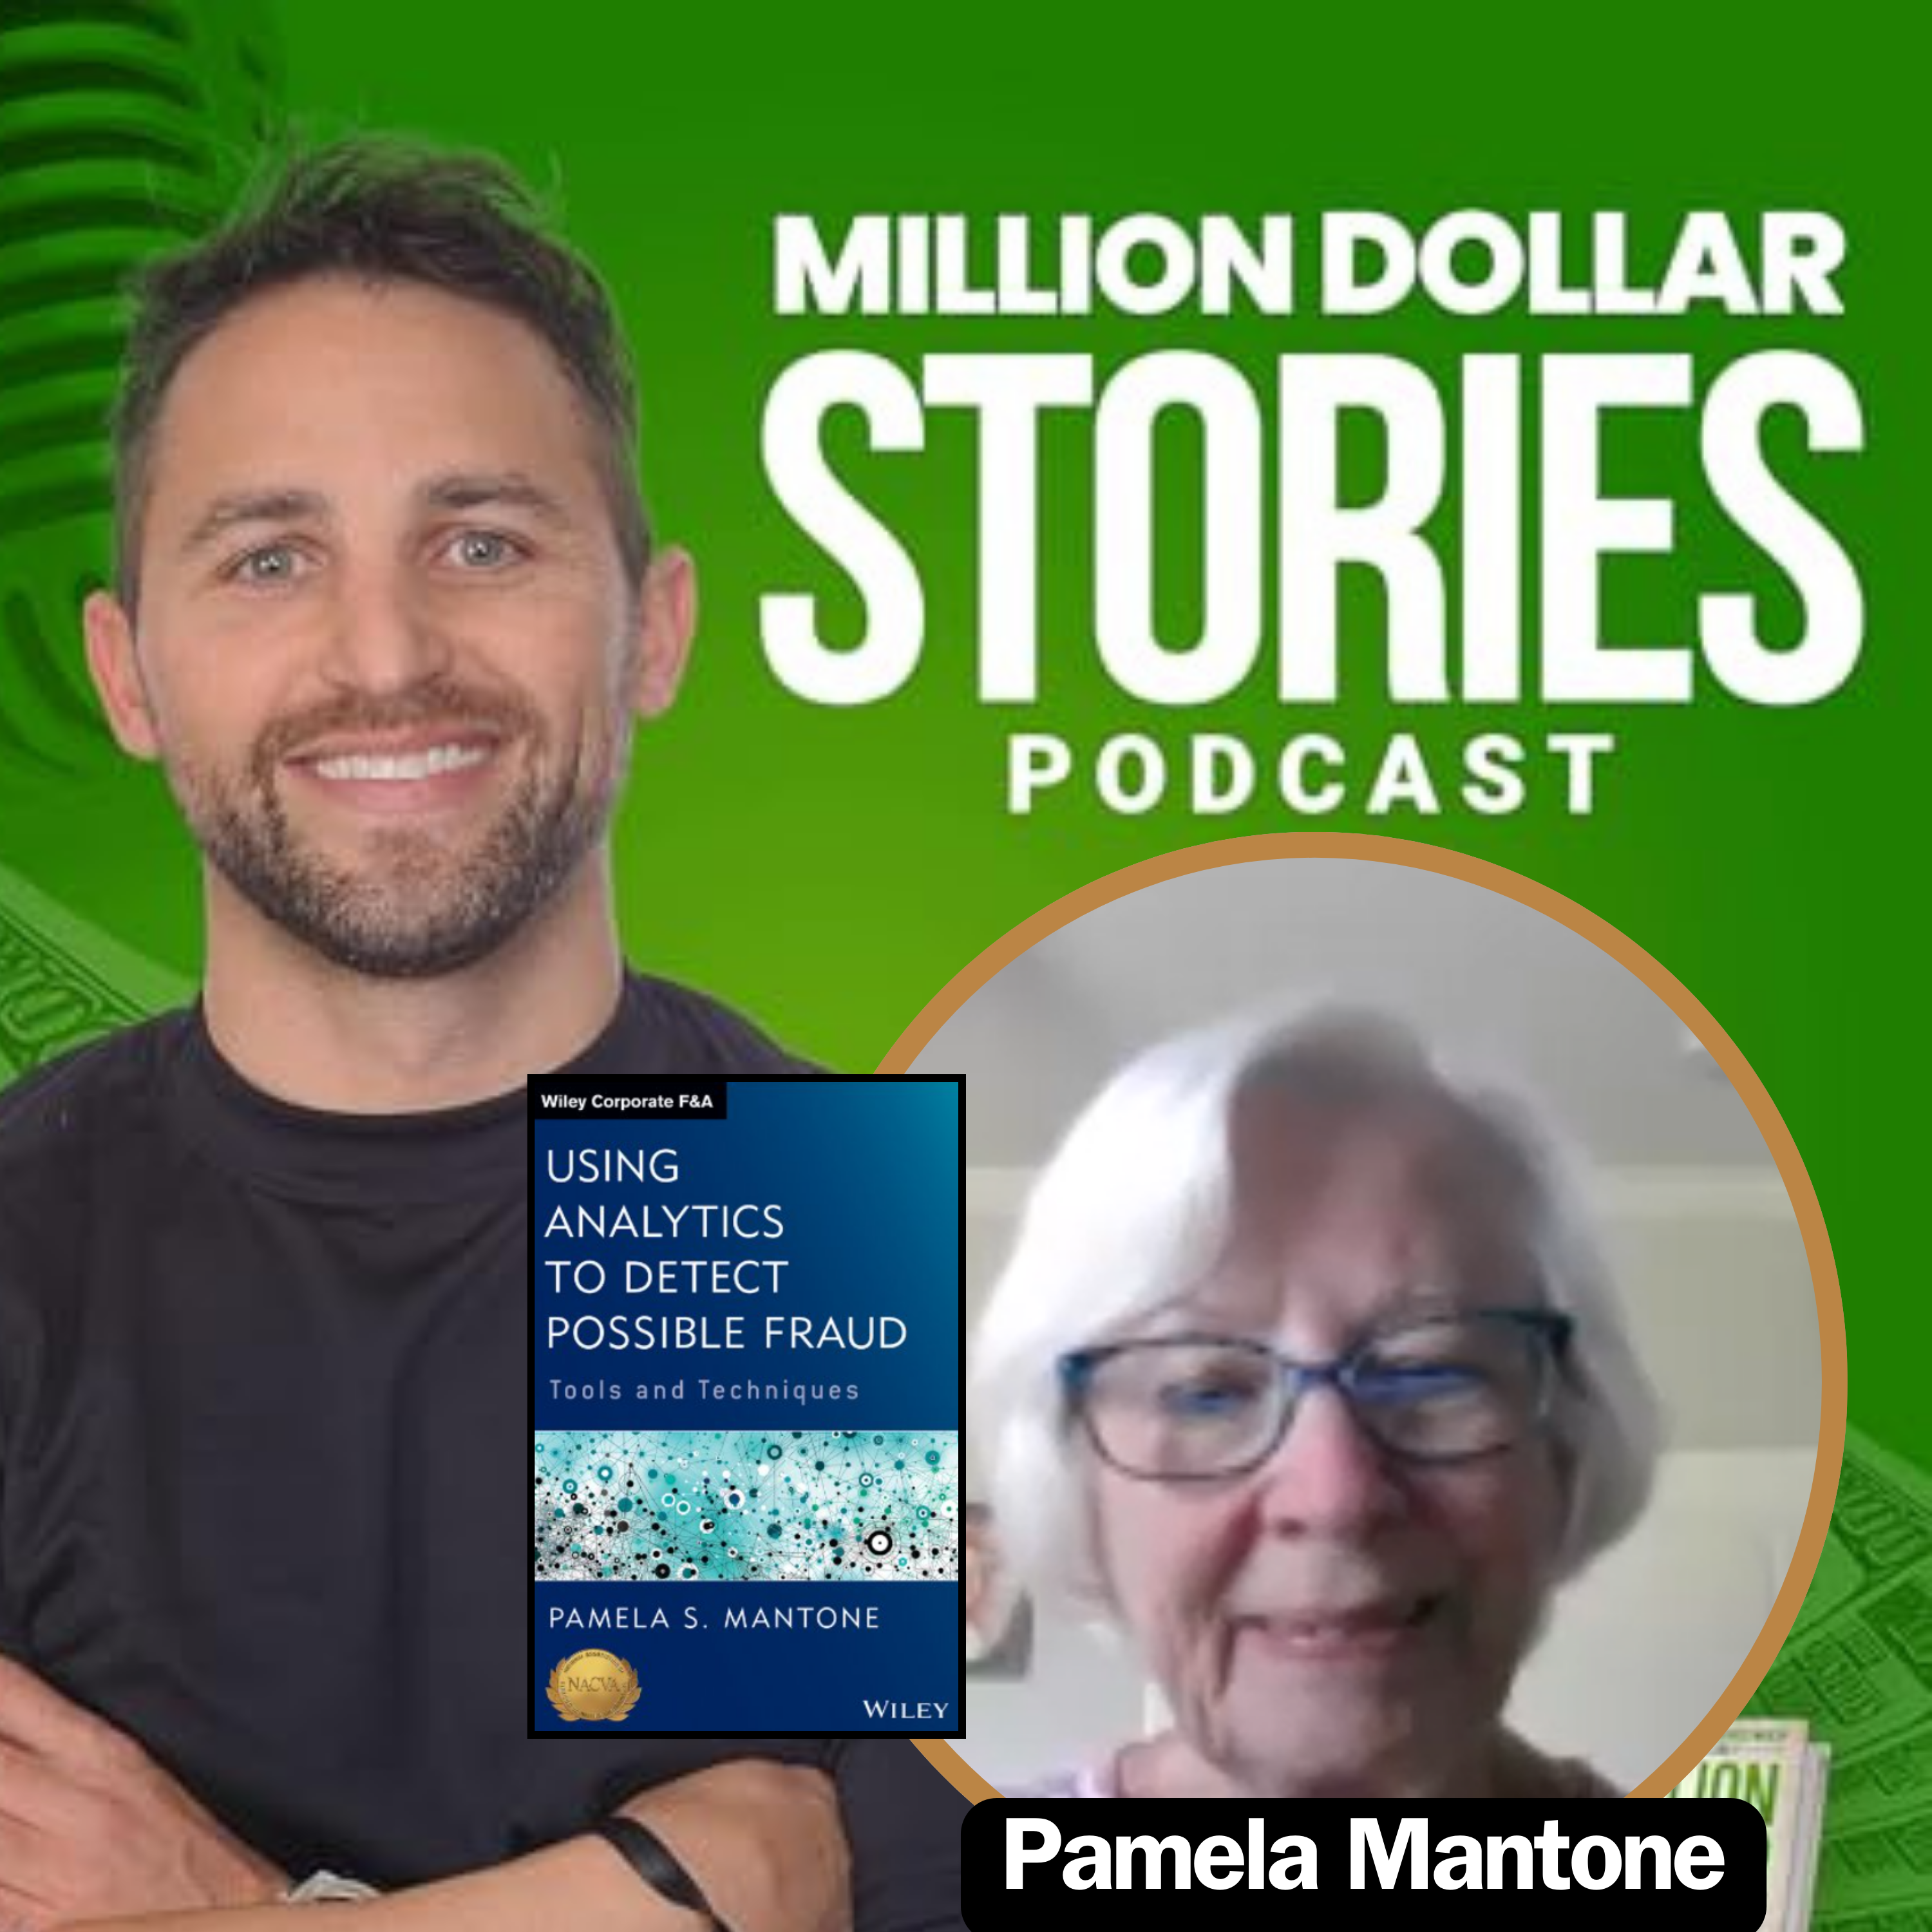 Mike Fallat interviews Pamela Mantone